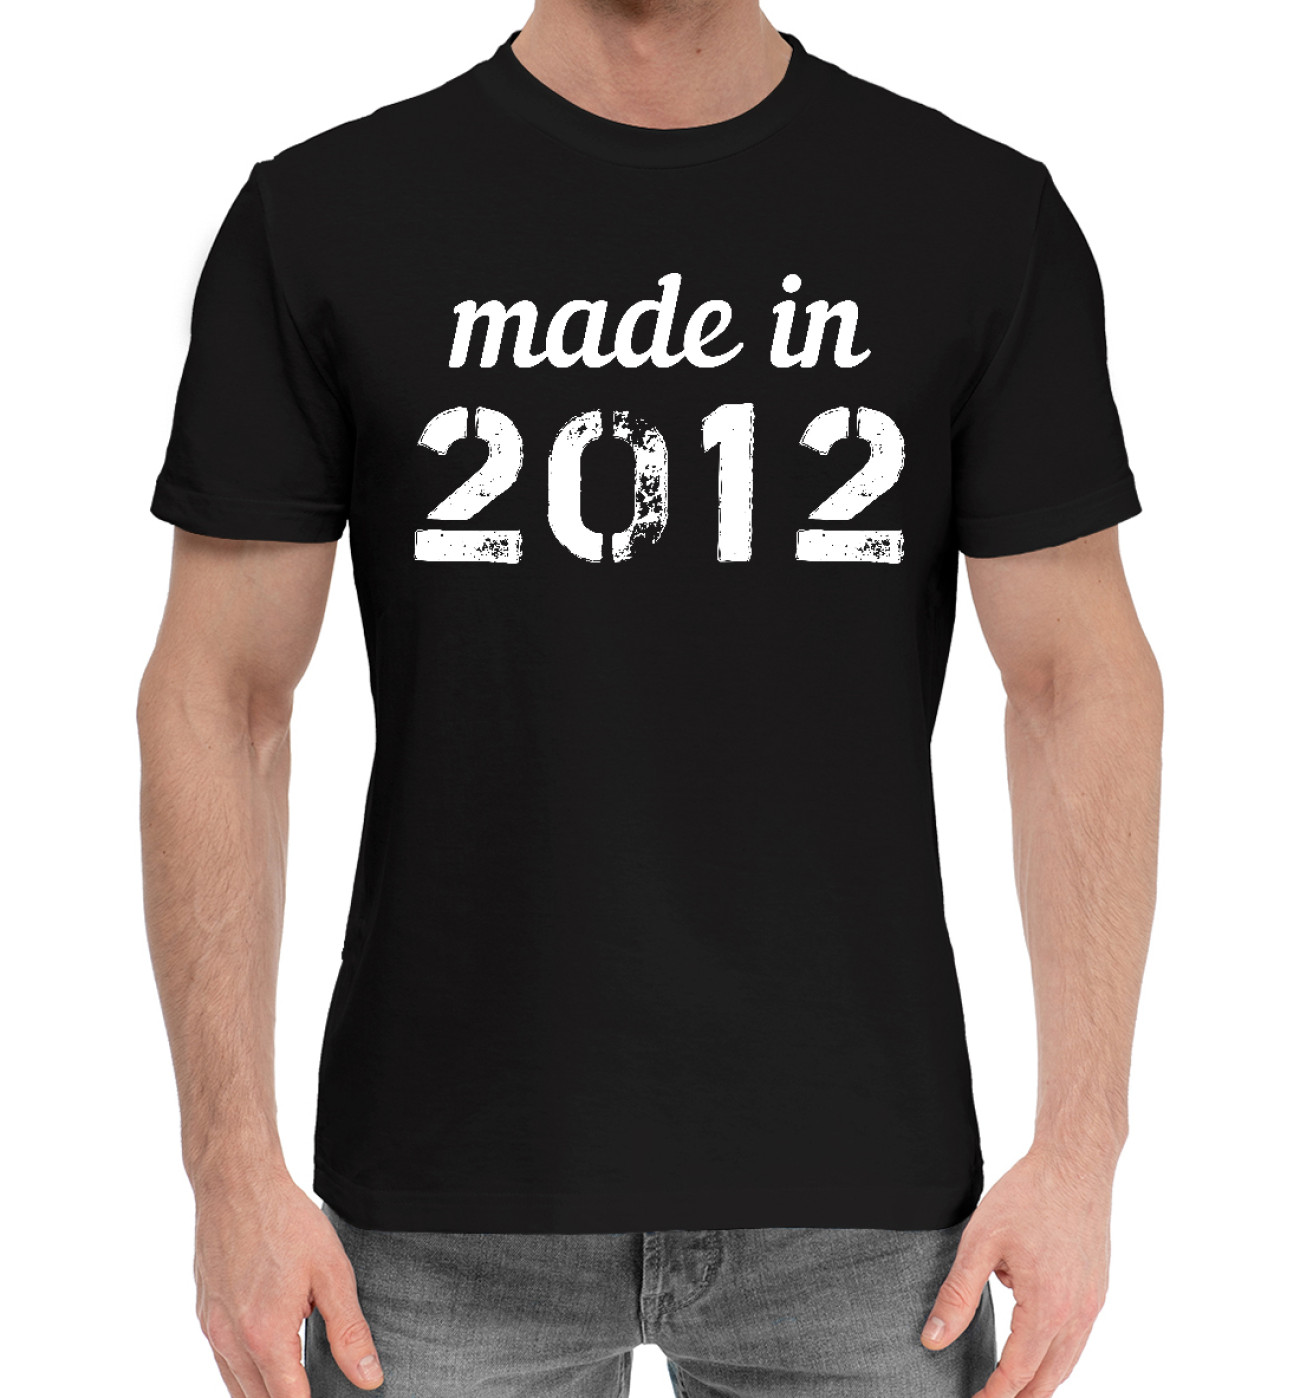 Мужская Хлопковая футболка Made in 2012, артикул: DRZ-726089-hfu-2